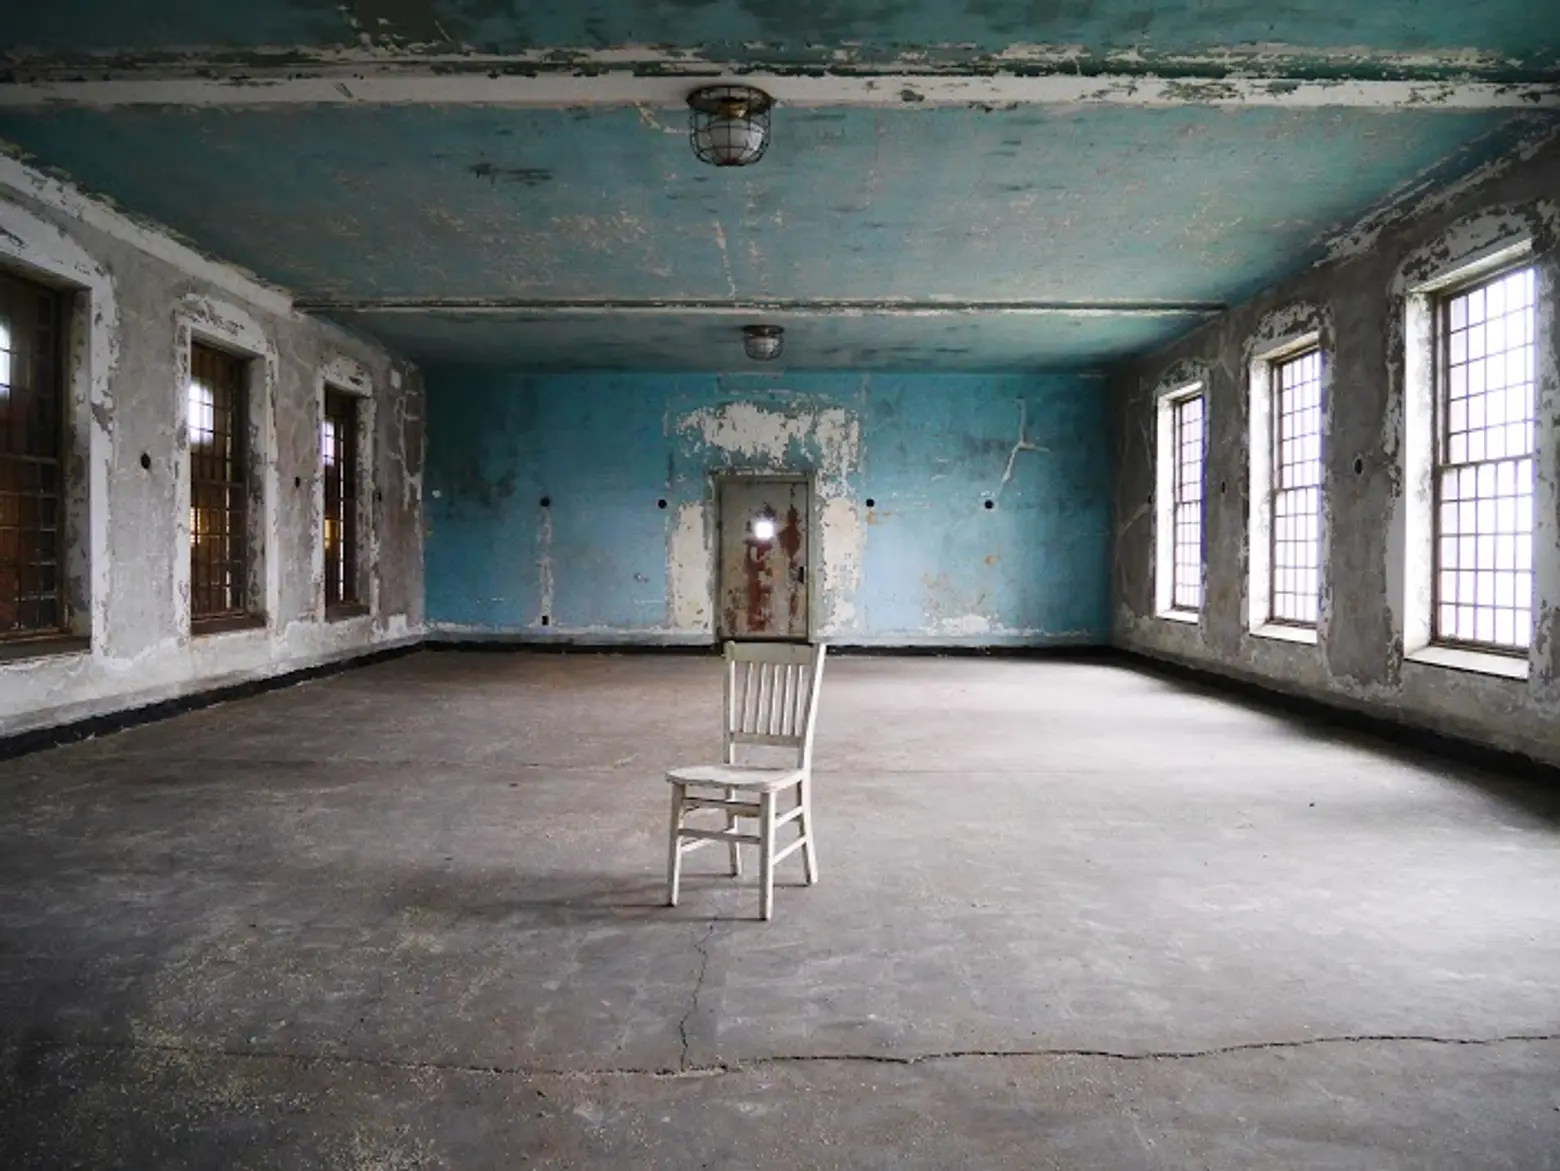 Ellis Island hospital complex, New York Adventure Club, abandoned places NYC